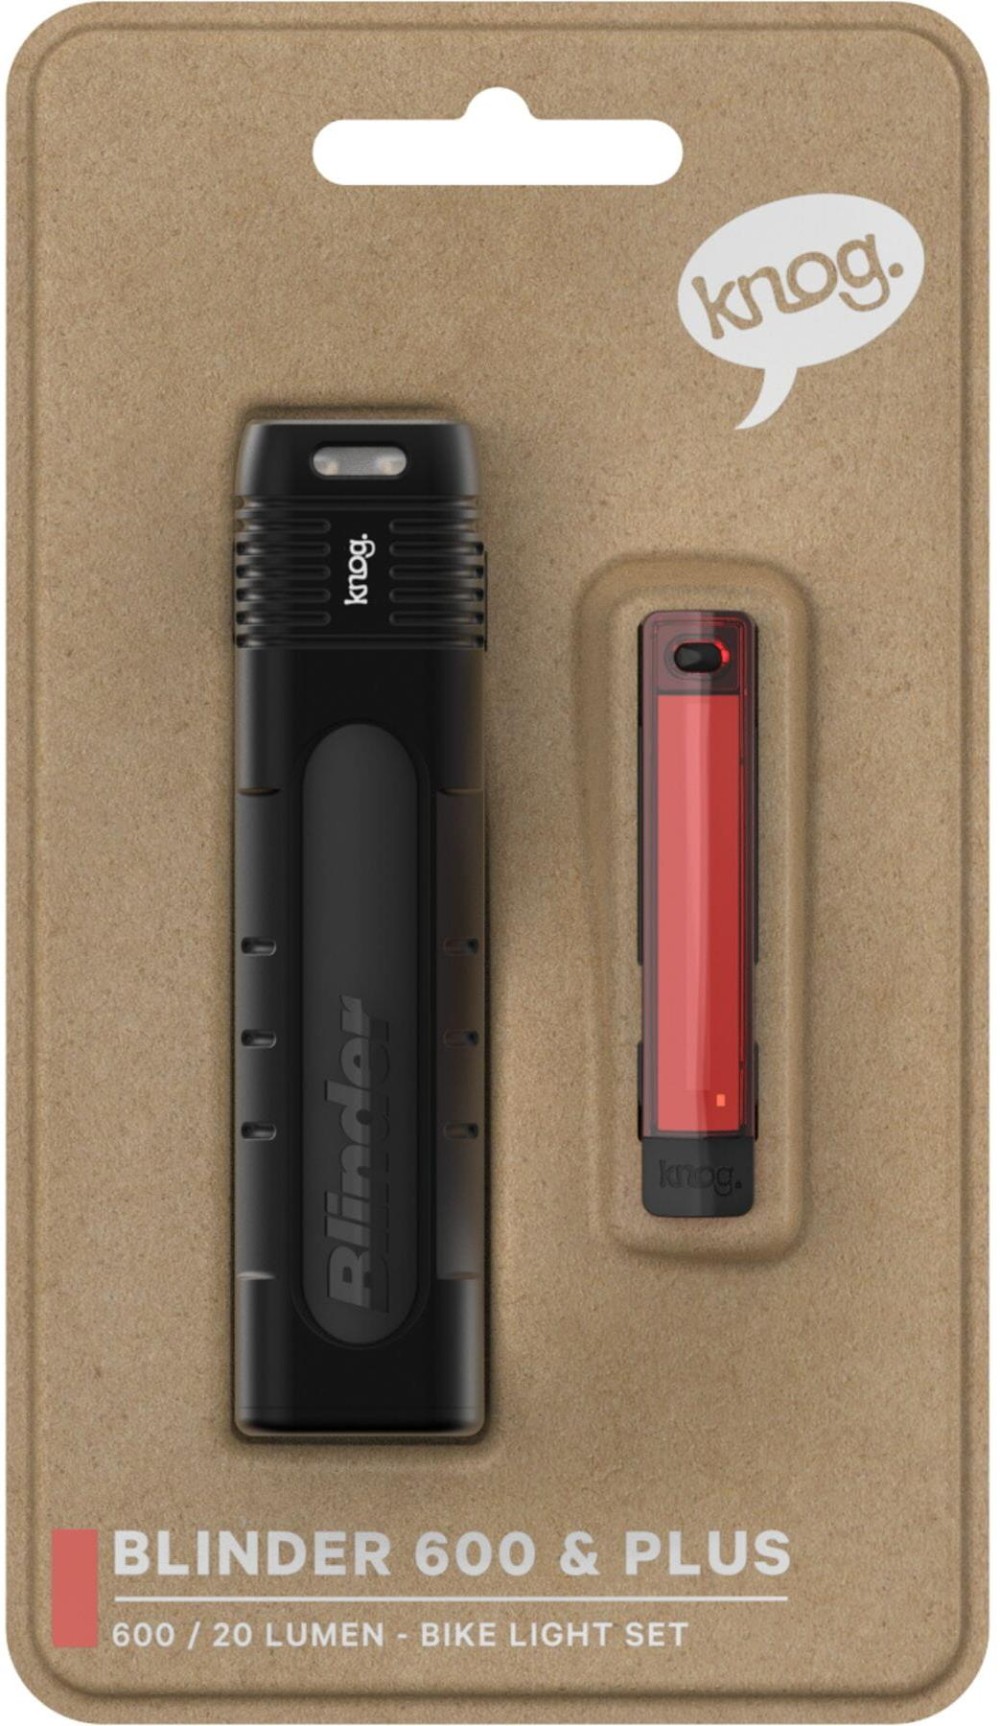 Blinder Pro 600 & Plus 20 USB Rechargeable Bike Light Set image 0